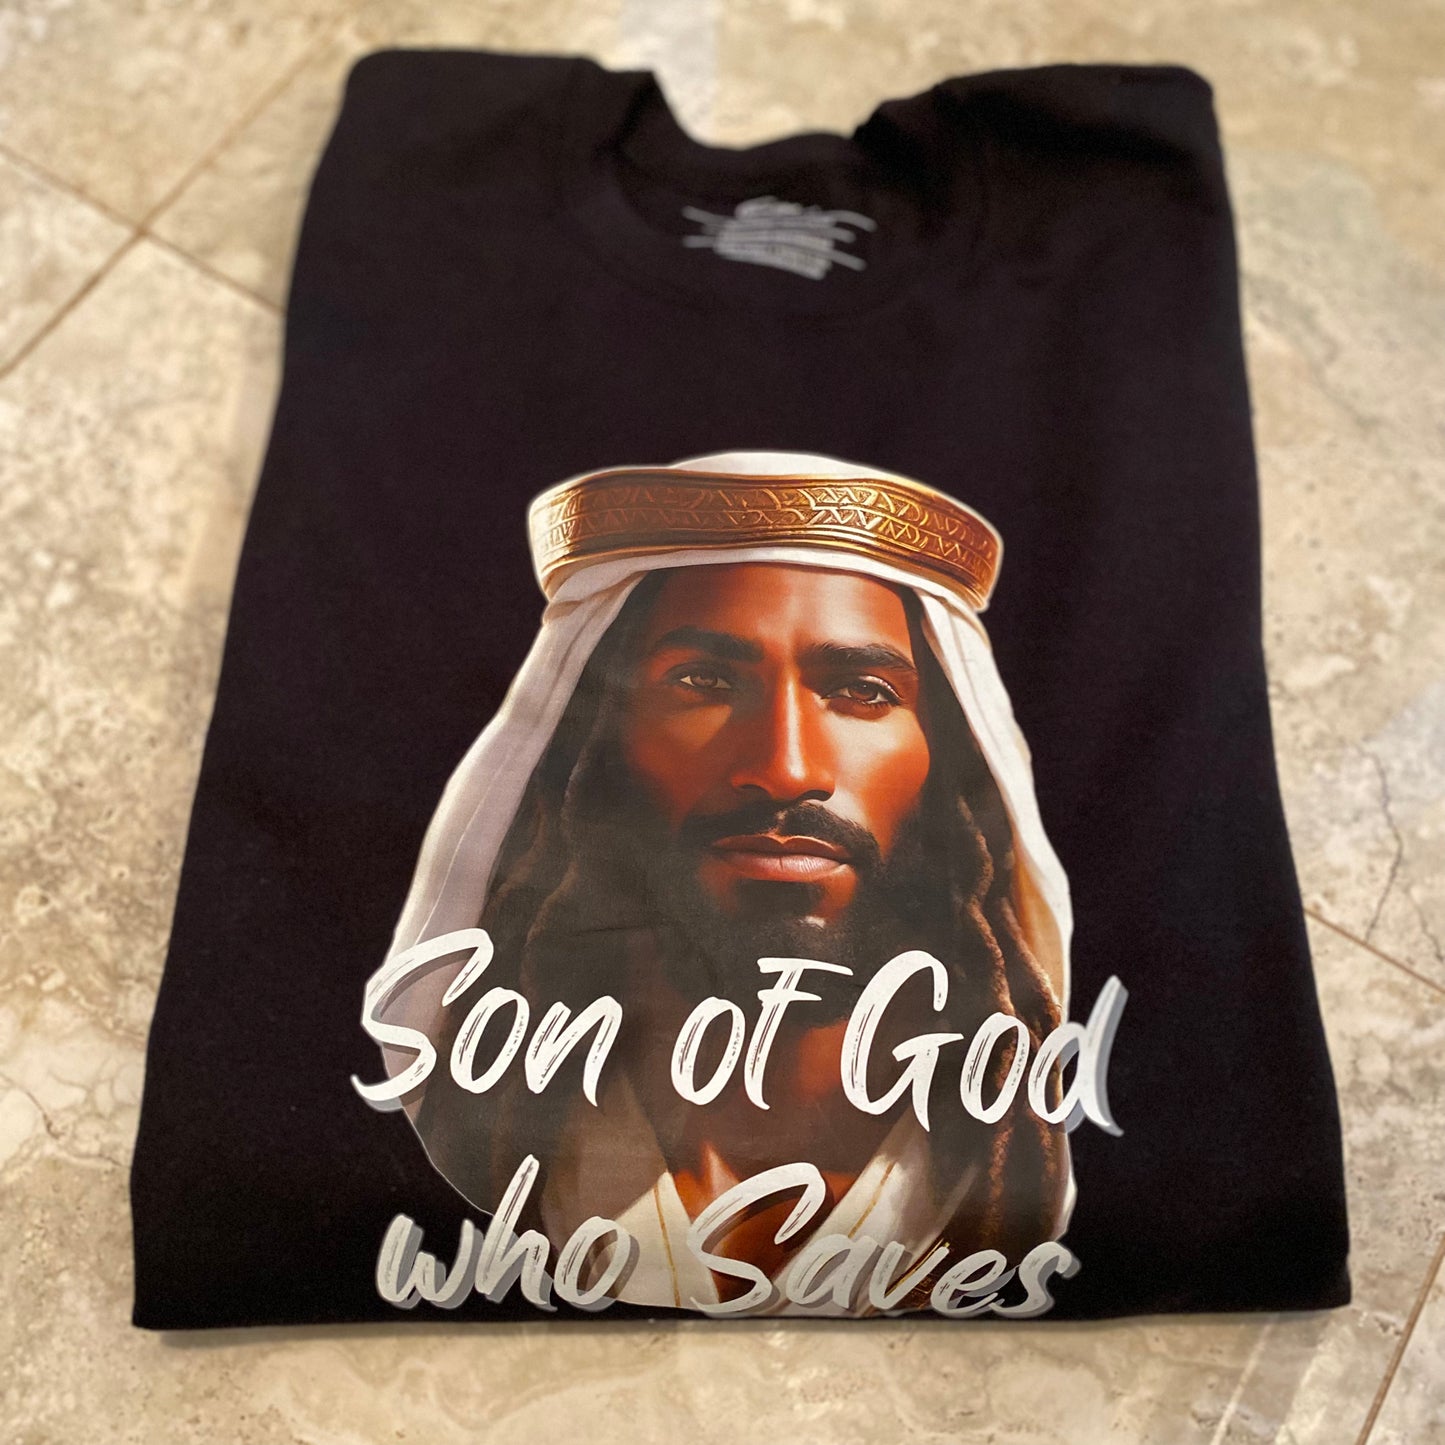 Black Jesus - Son of God who Saves Sweatshirt